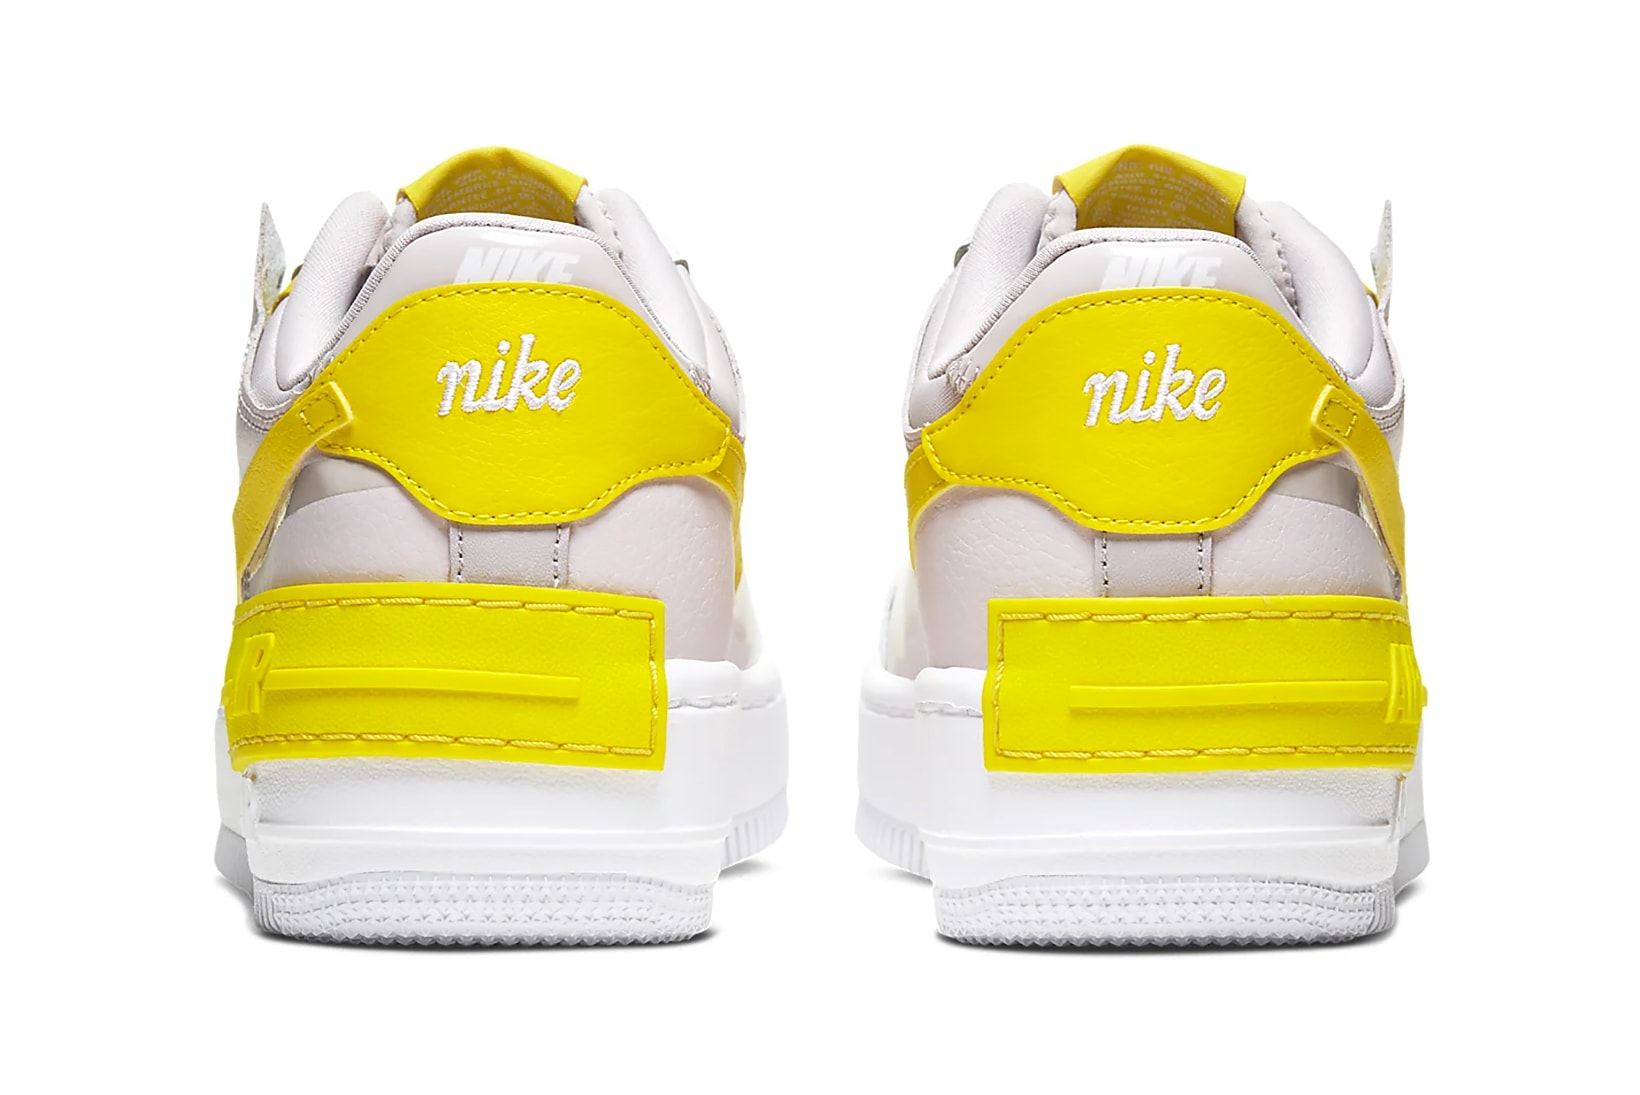 nike air force 1 shadow womens sneakers yellow nude pink white shoes footwear sneakerhead